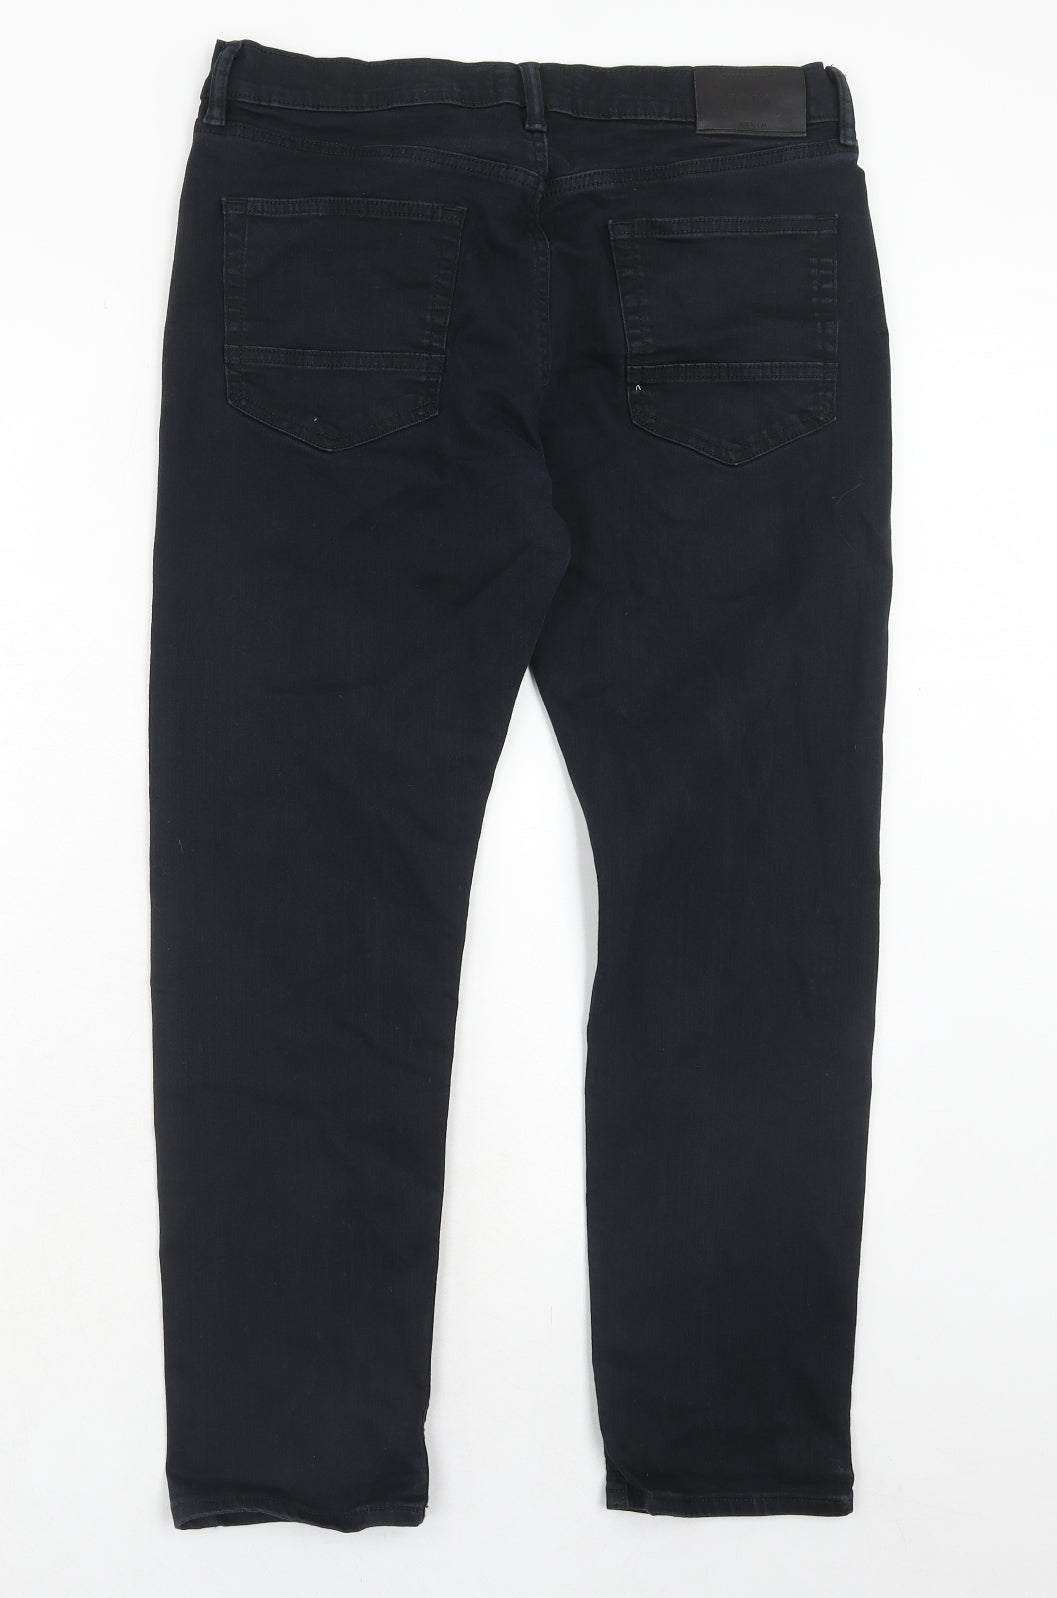 Marks and Spencer Mens Black Cotton Skinny Jeans Size 34 in L29 in Slim Zip